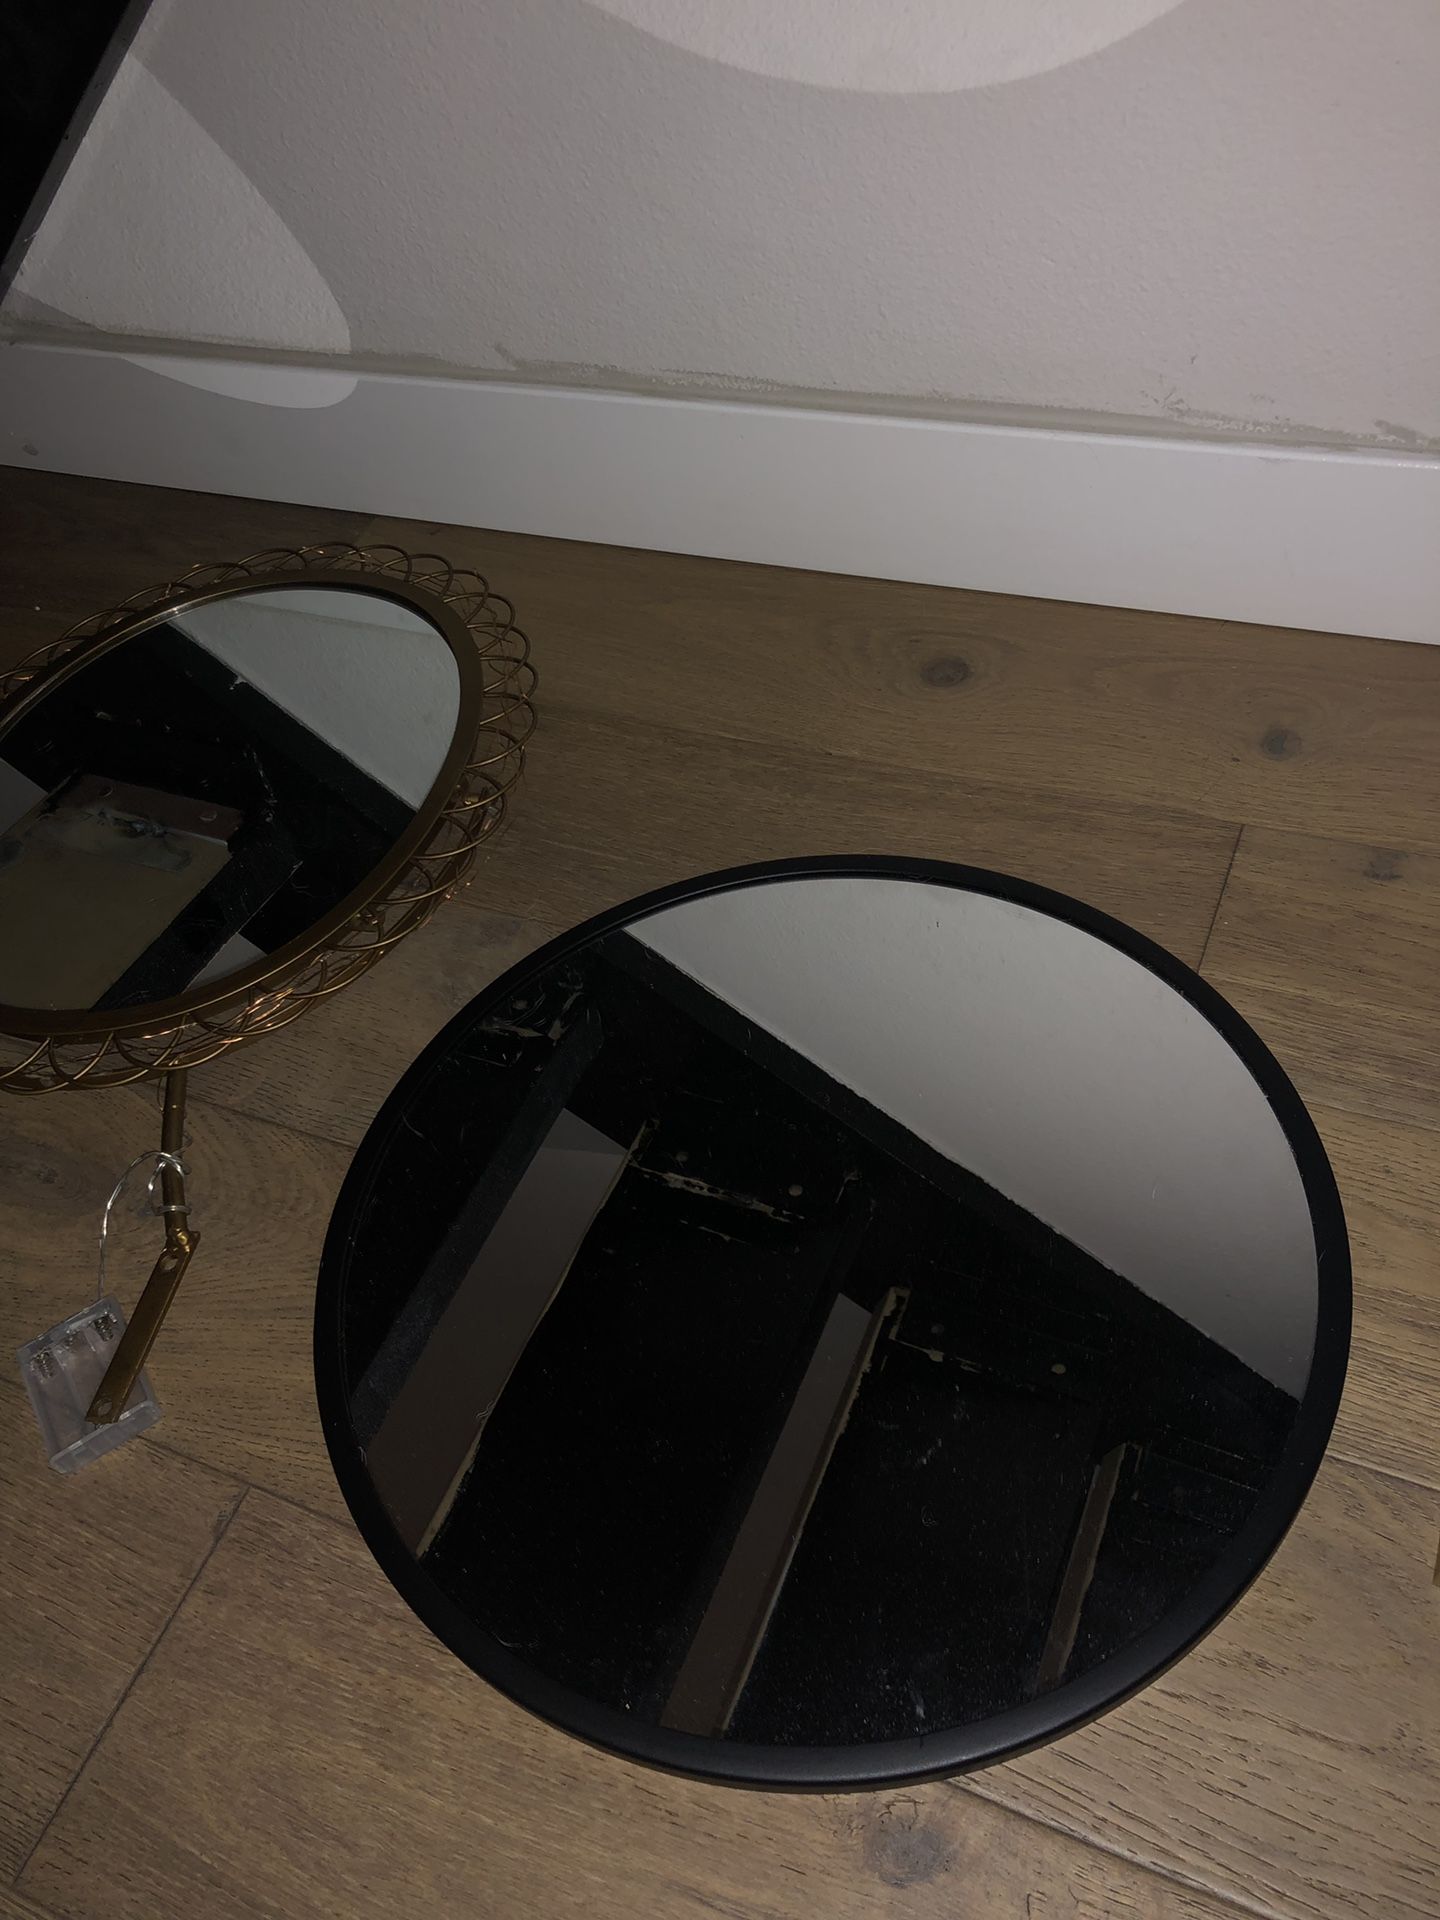 Black circle mirror